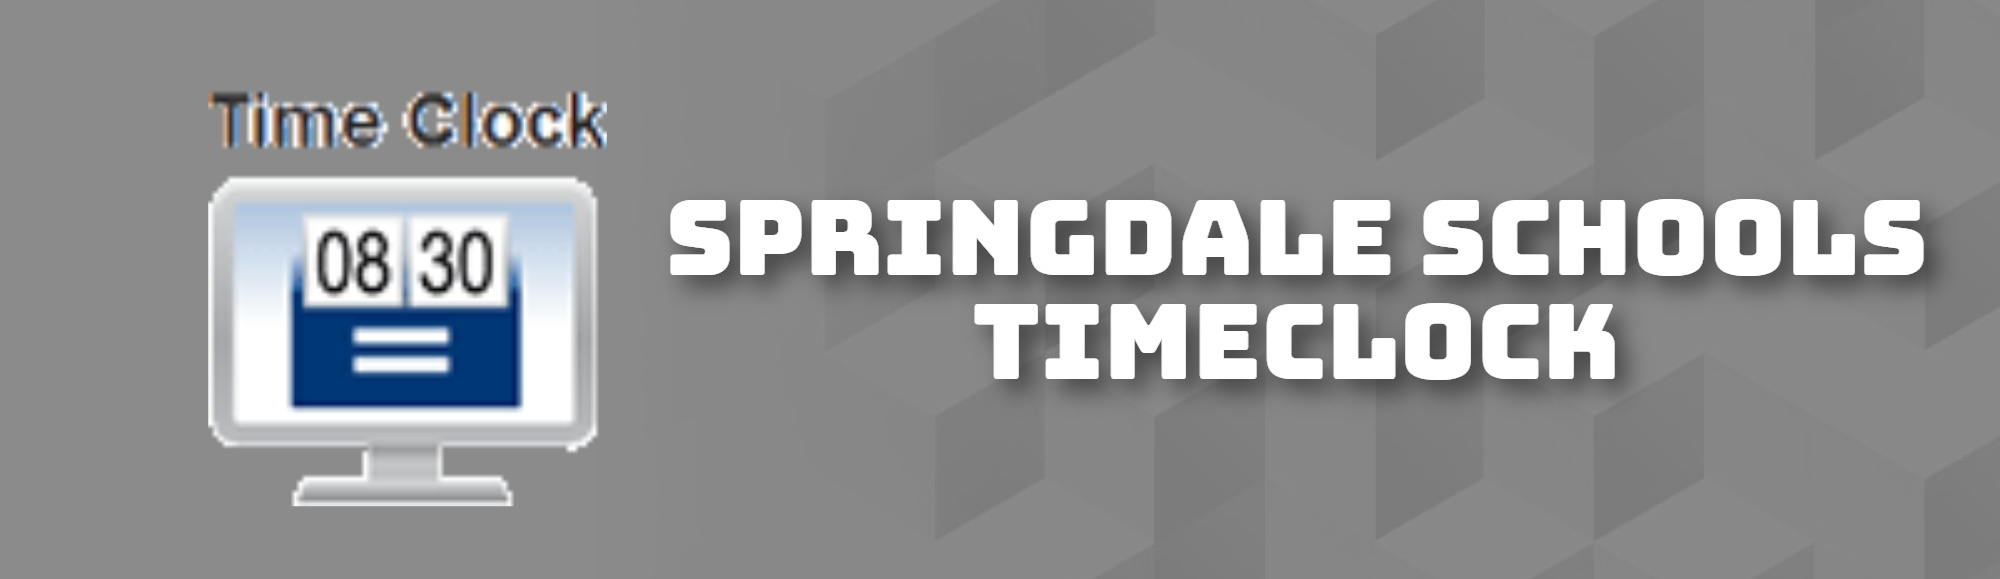 SPRINGDALE SCHOOLS TIMECLOCK